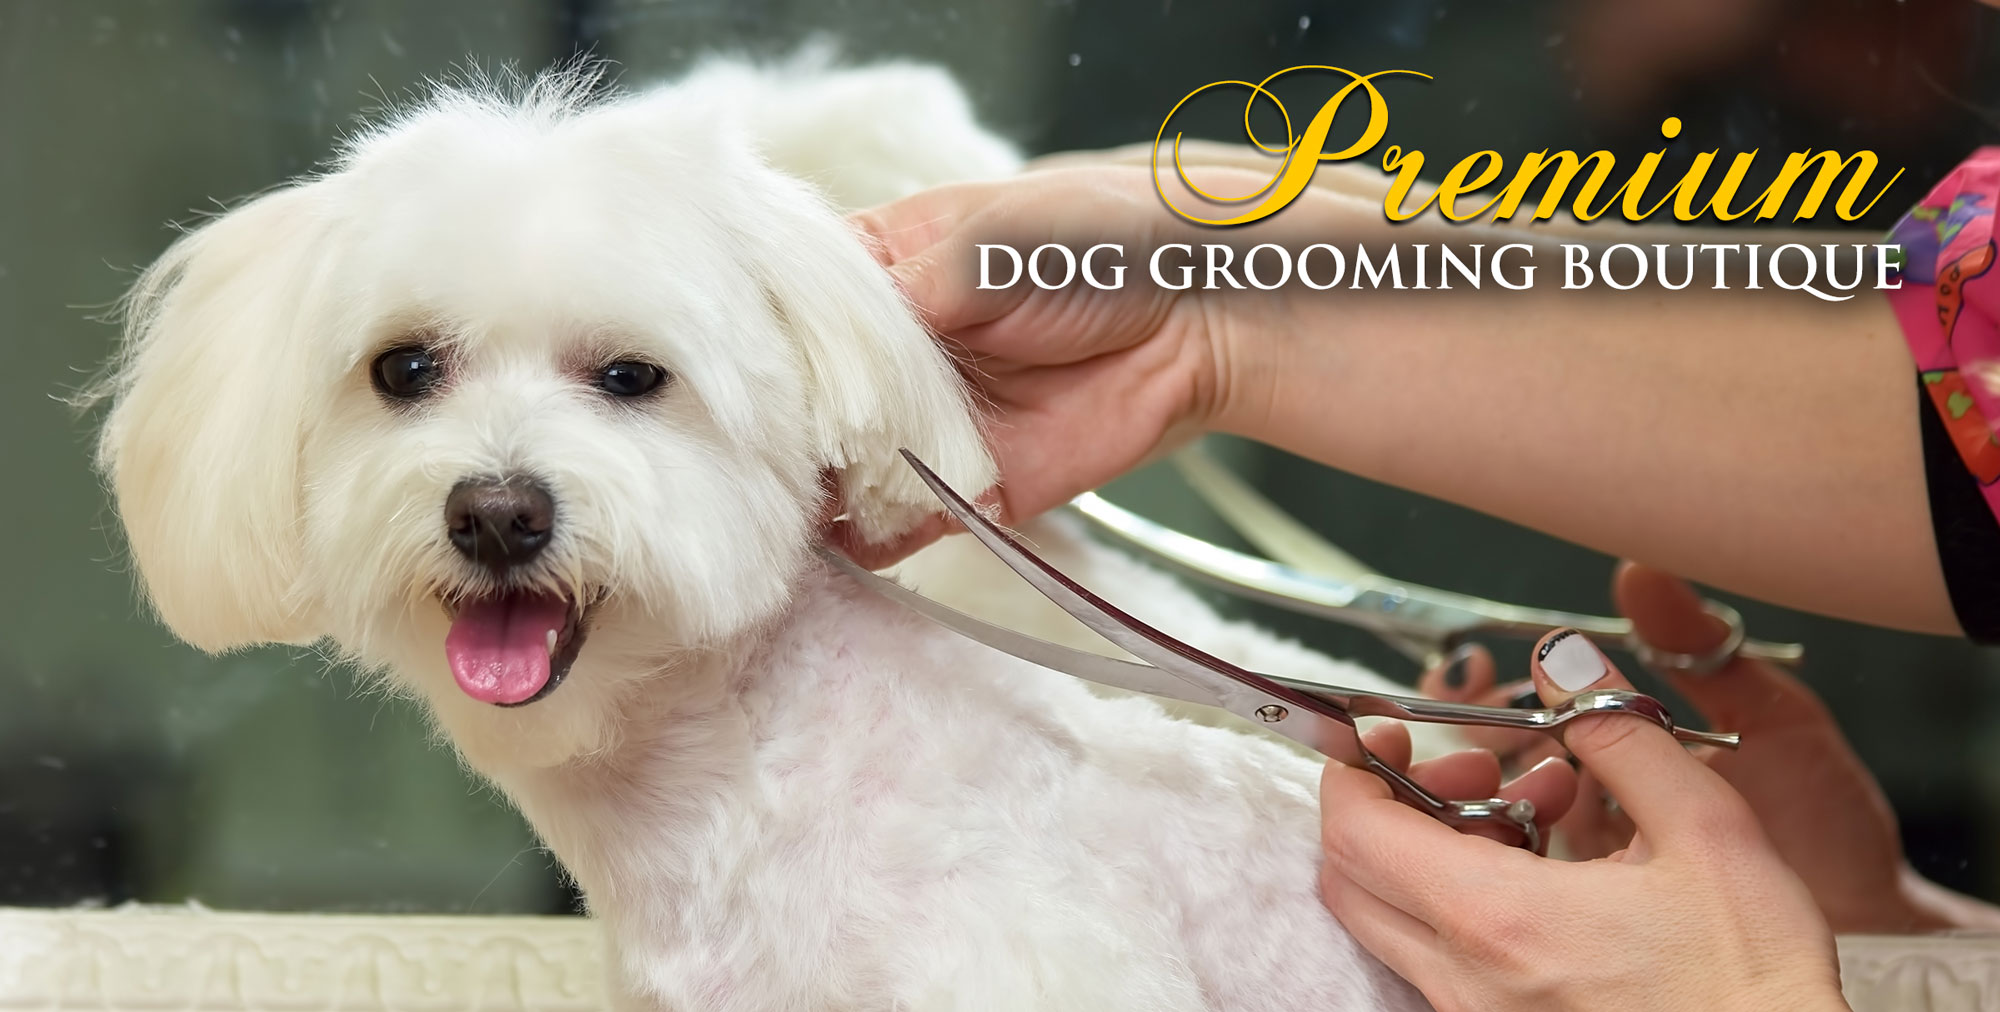 Dog Groomers Mornington | Dog Grooming Mornington | Dashing Designer Dogs Mornington | Dog grooming | Doggy Day Care | Dog Walking | Dog Groomers Mornington Peninsula